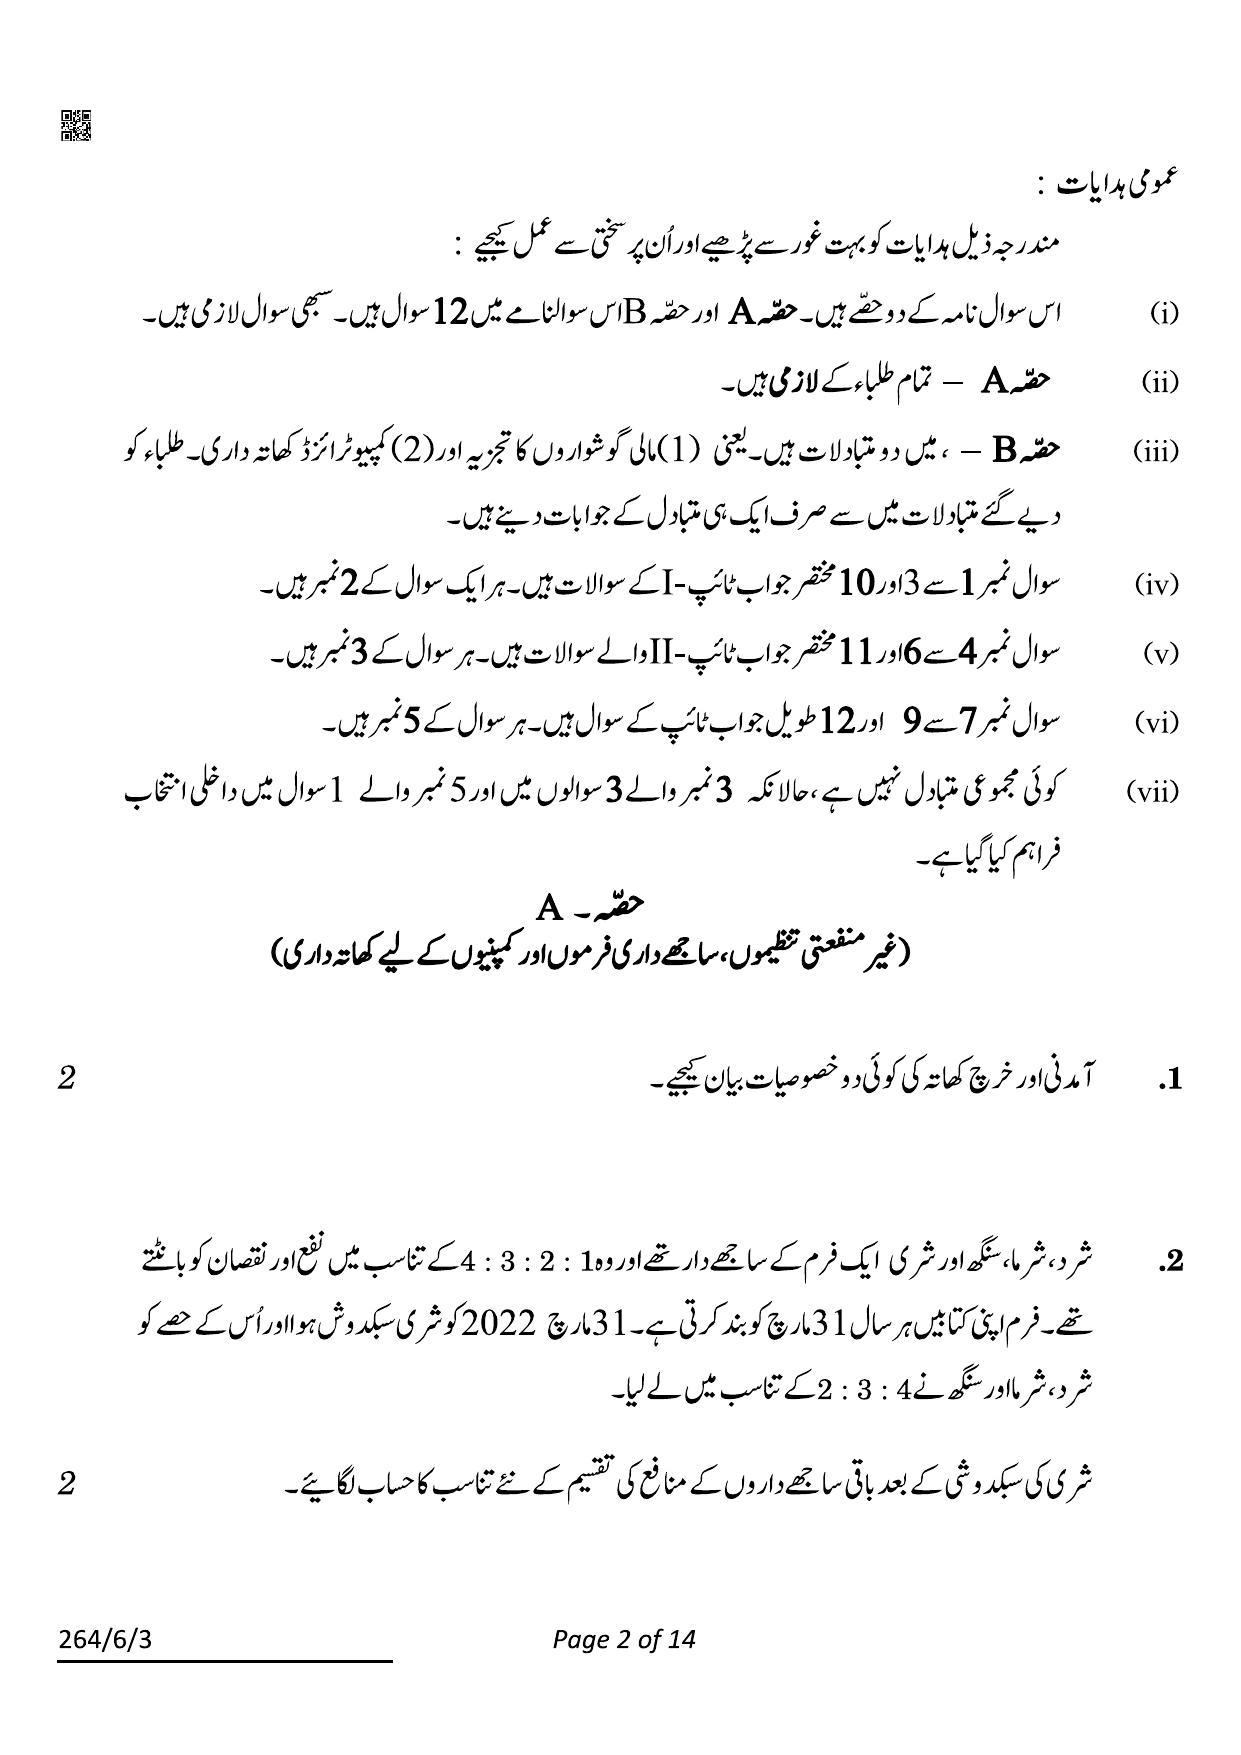 CBSE Class 12 264-6-3 Accountancy Urdu 2022 Compartment Question Paper - Page 2